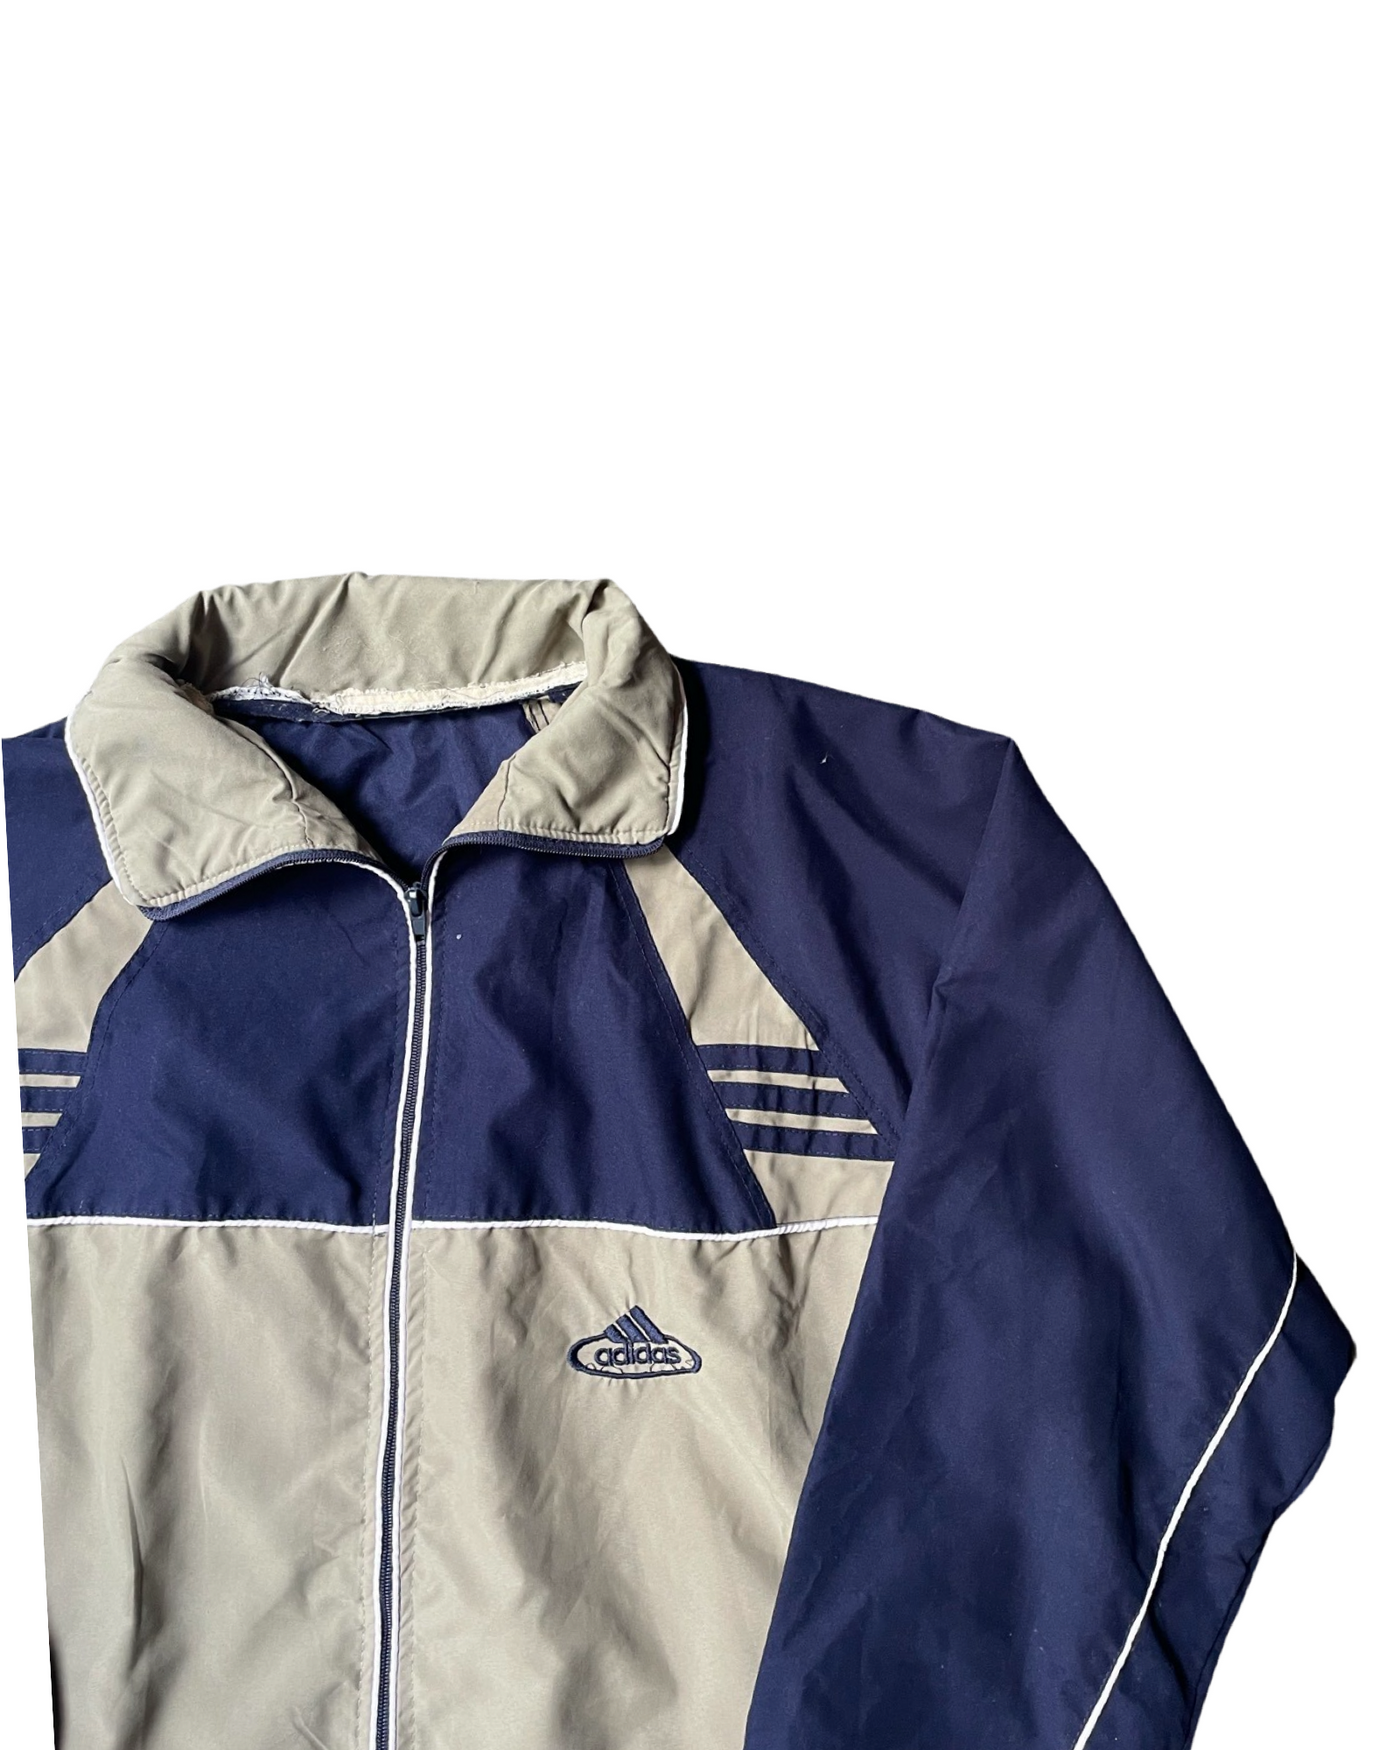 Vintage 90’s Adidas Parachute Jacket Size M